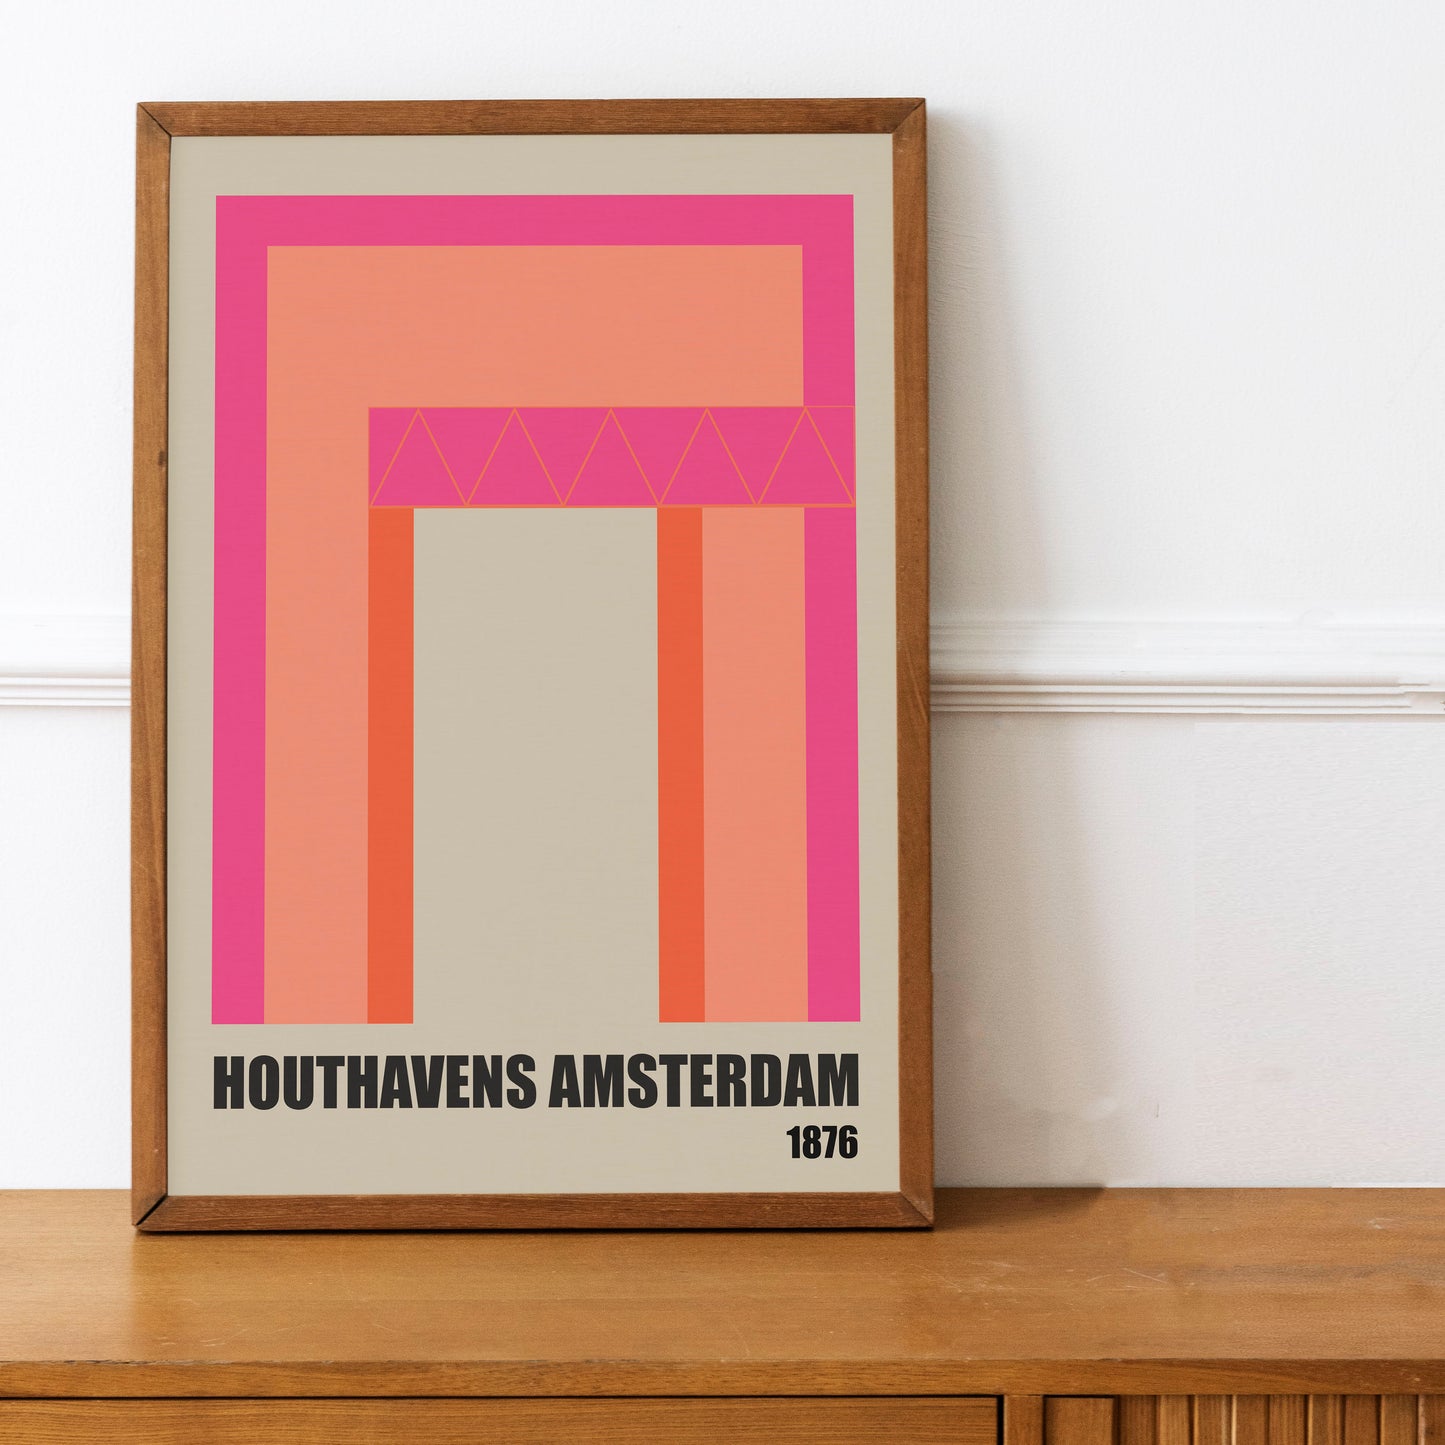 Houthavens Amsterdam